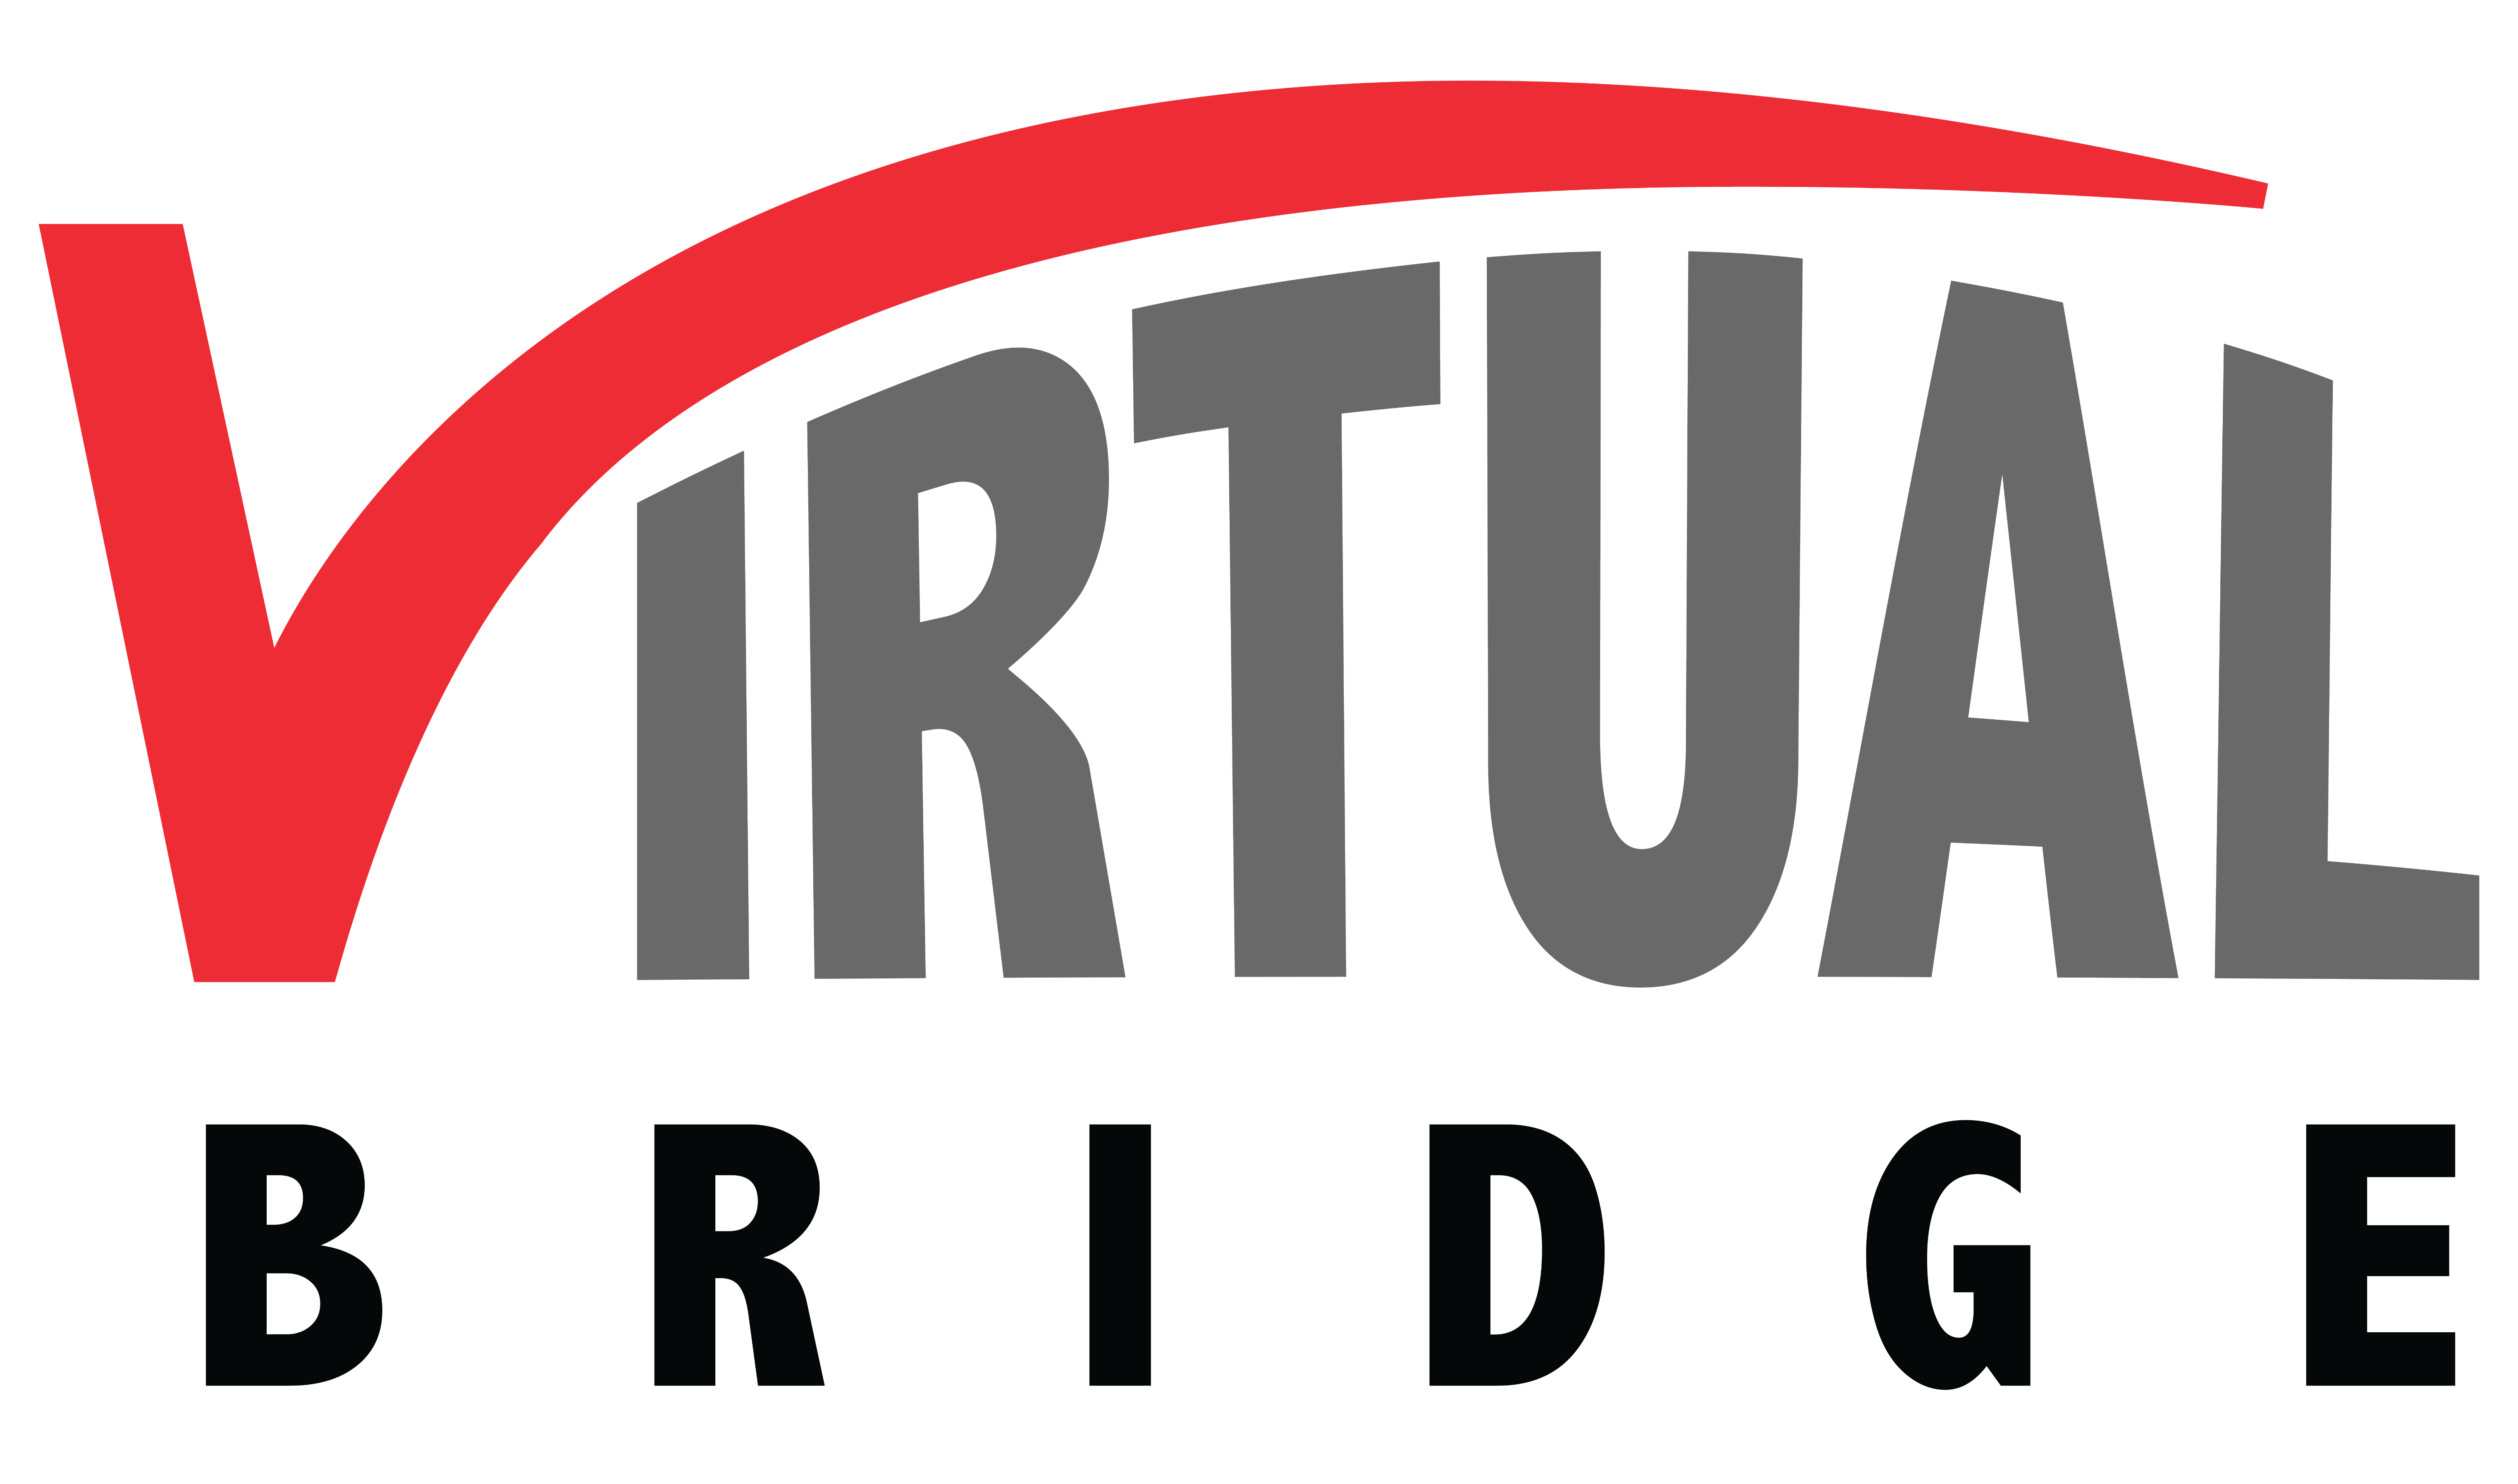 VIRTUAL BRIDGE